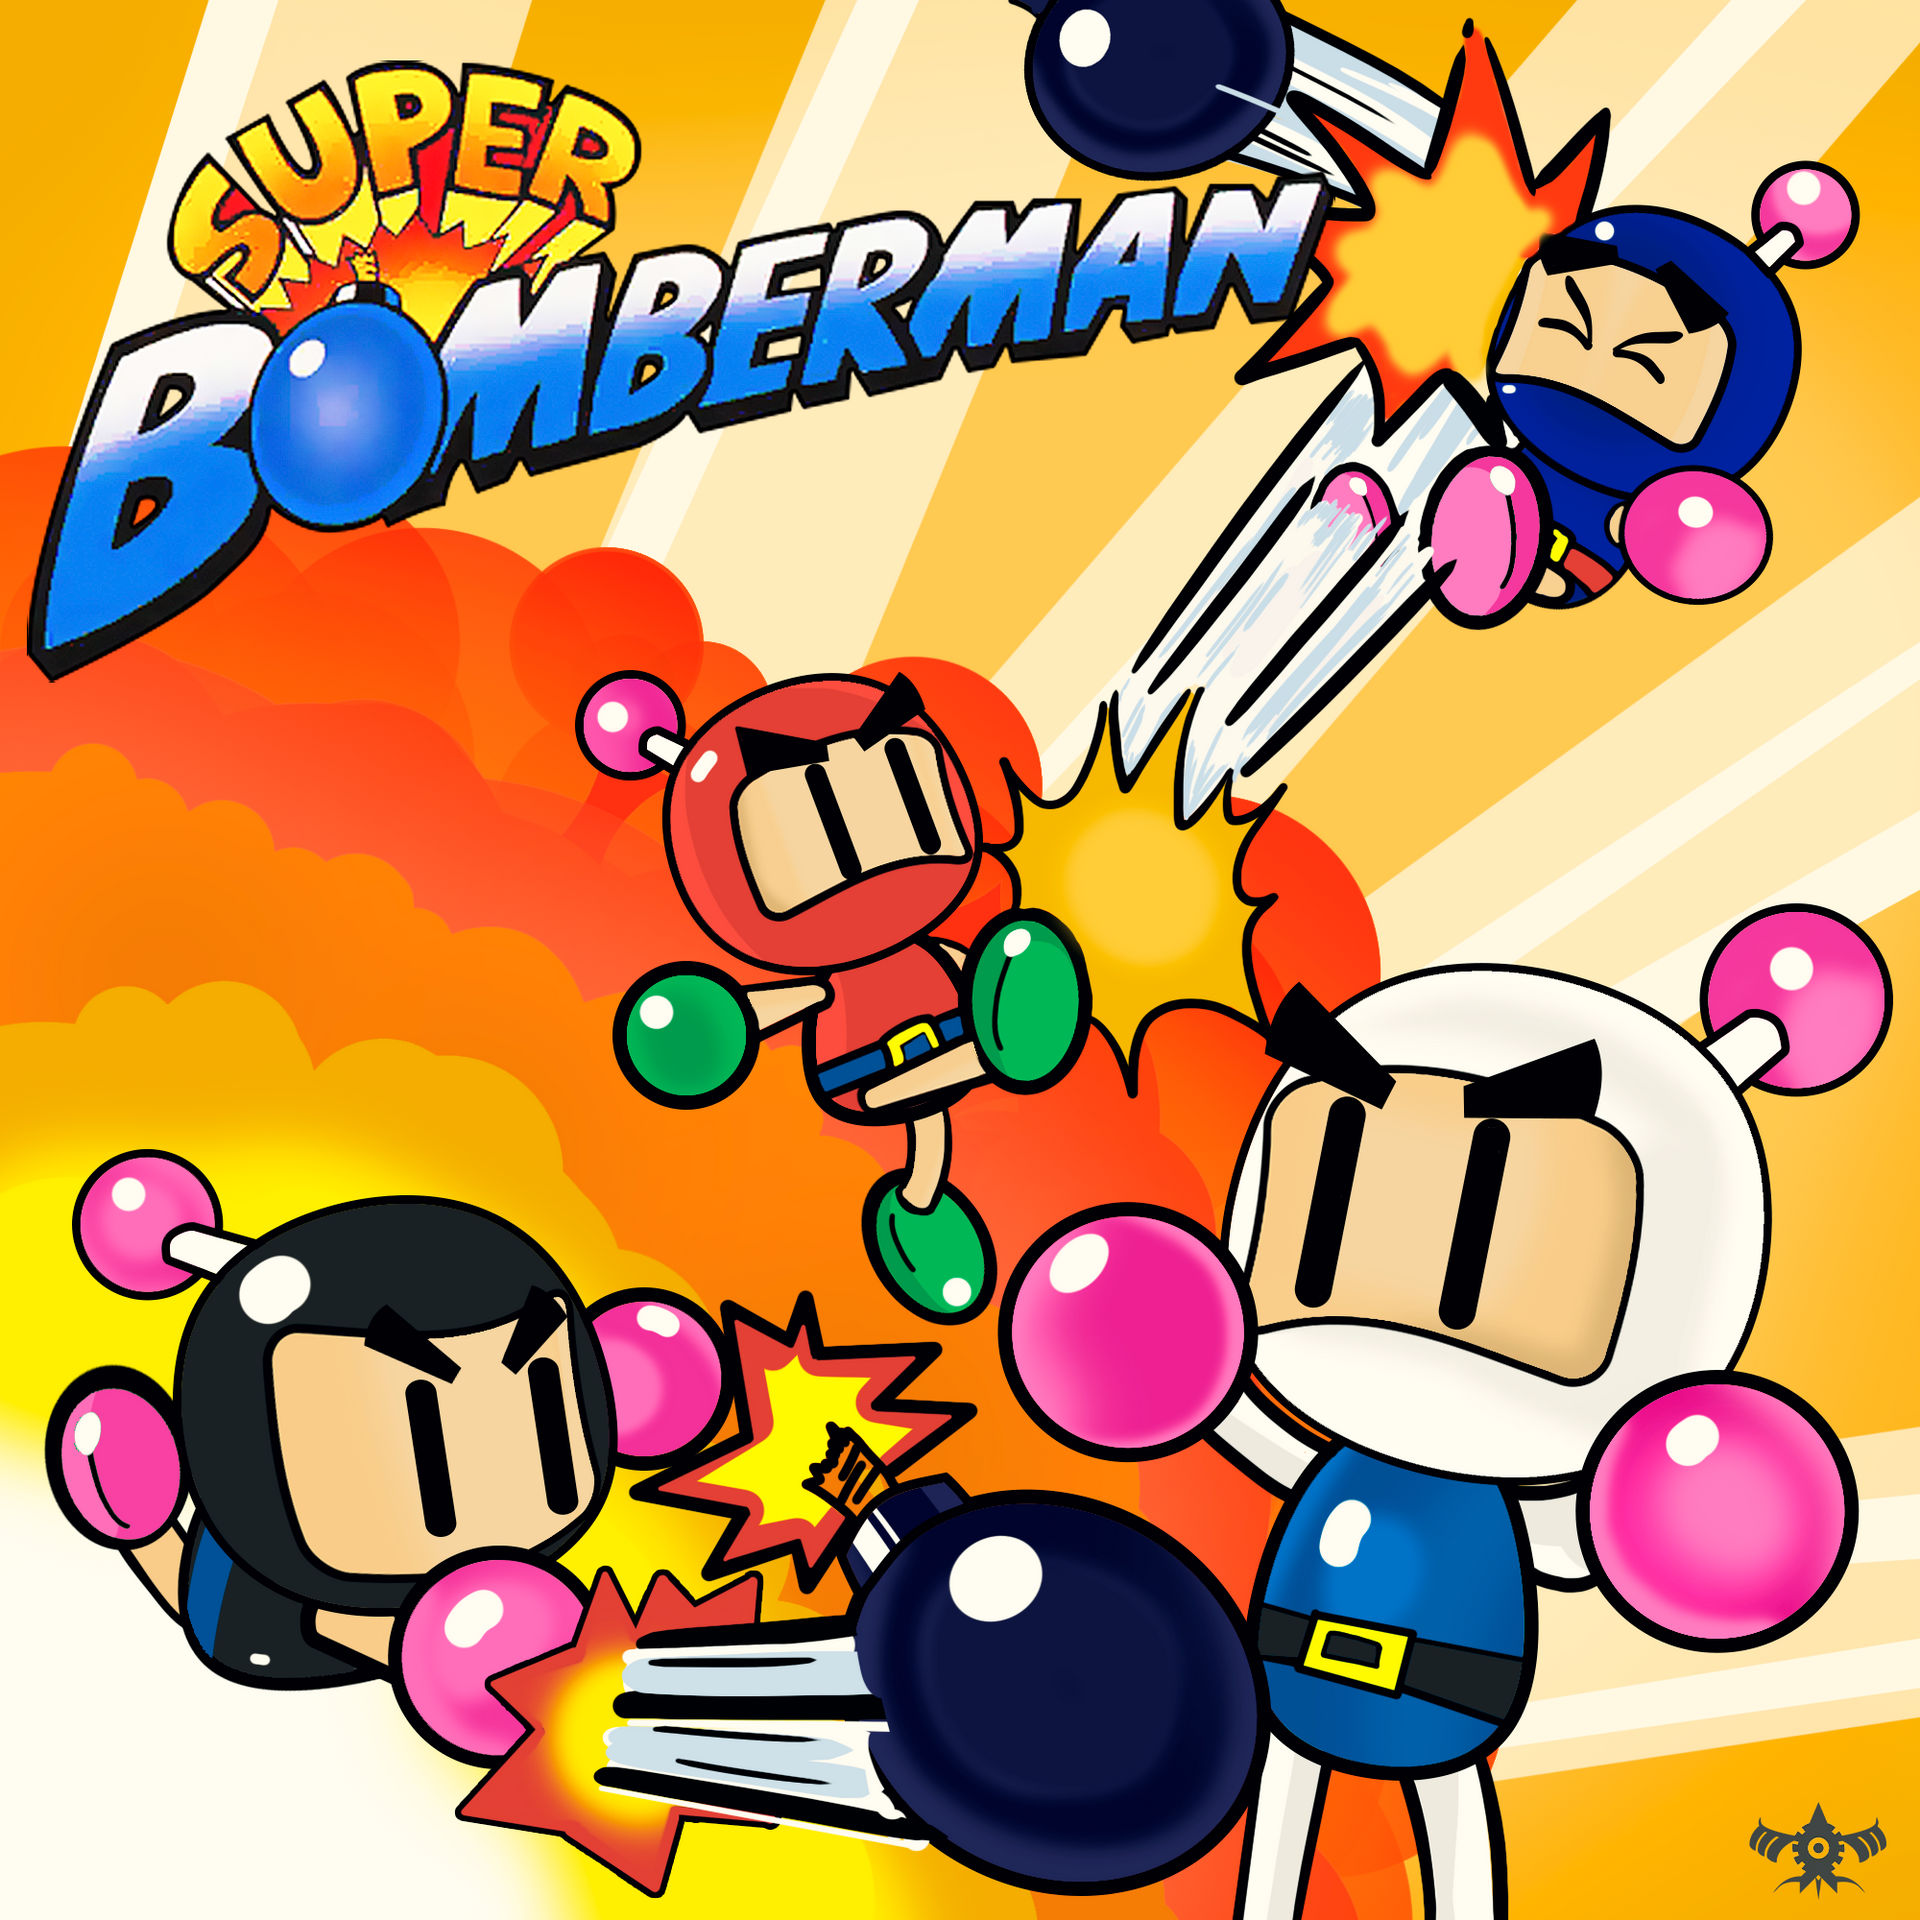 SUPER BOMBERMAN SNES COVER FANART by Paulodroid on DeviantArt